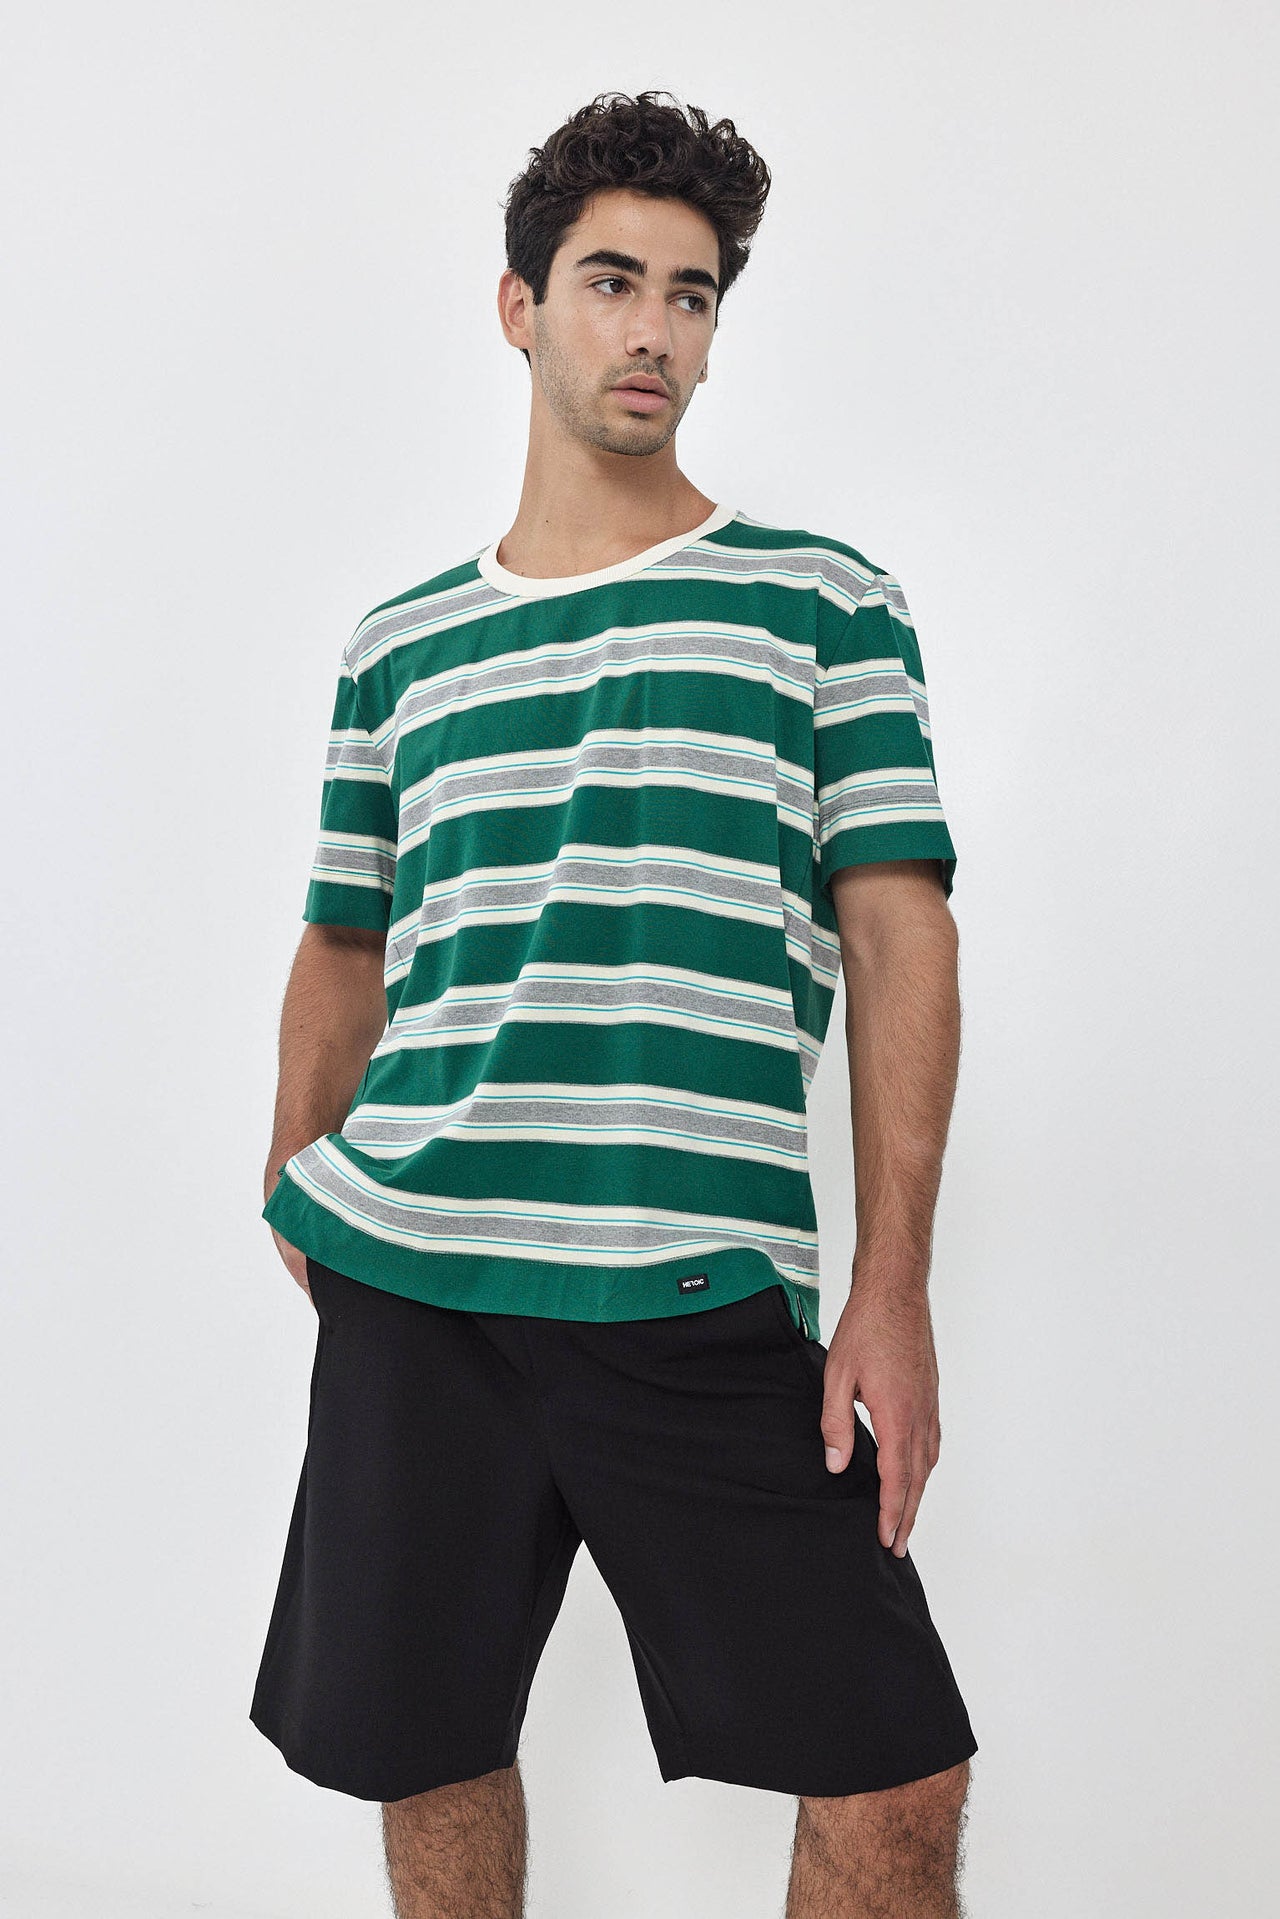 CHER T-Shirt S24 (0-3) - Green / Cream